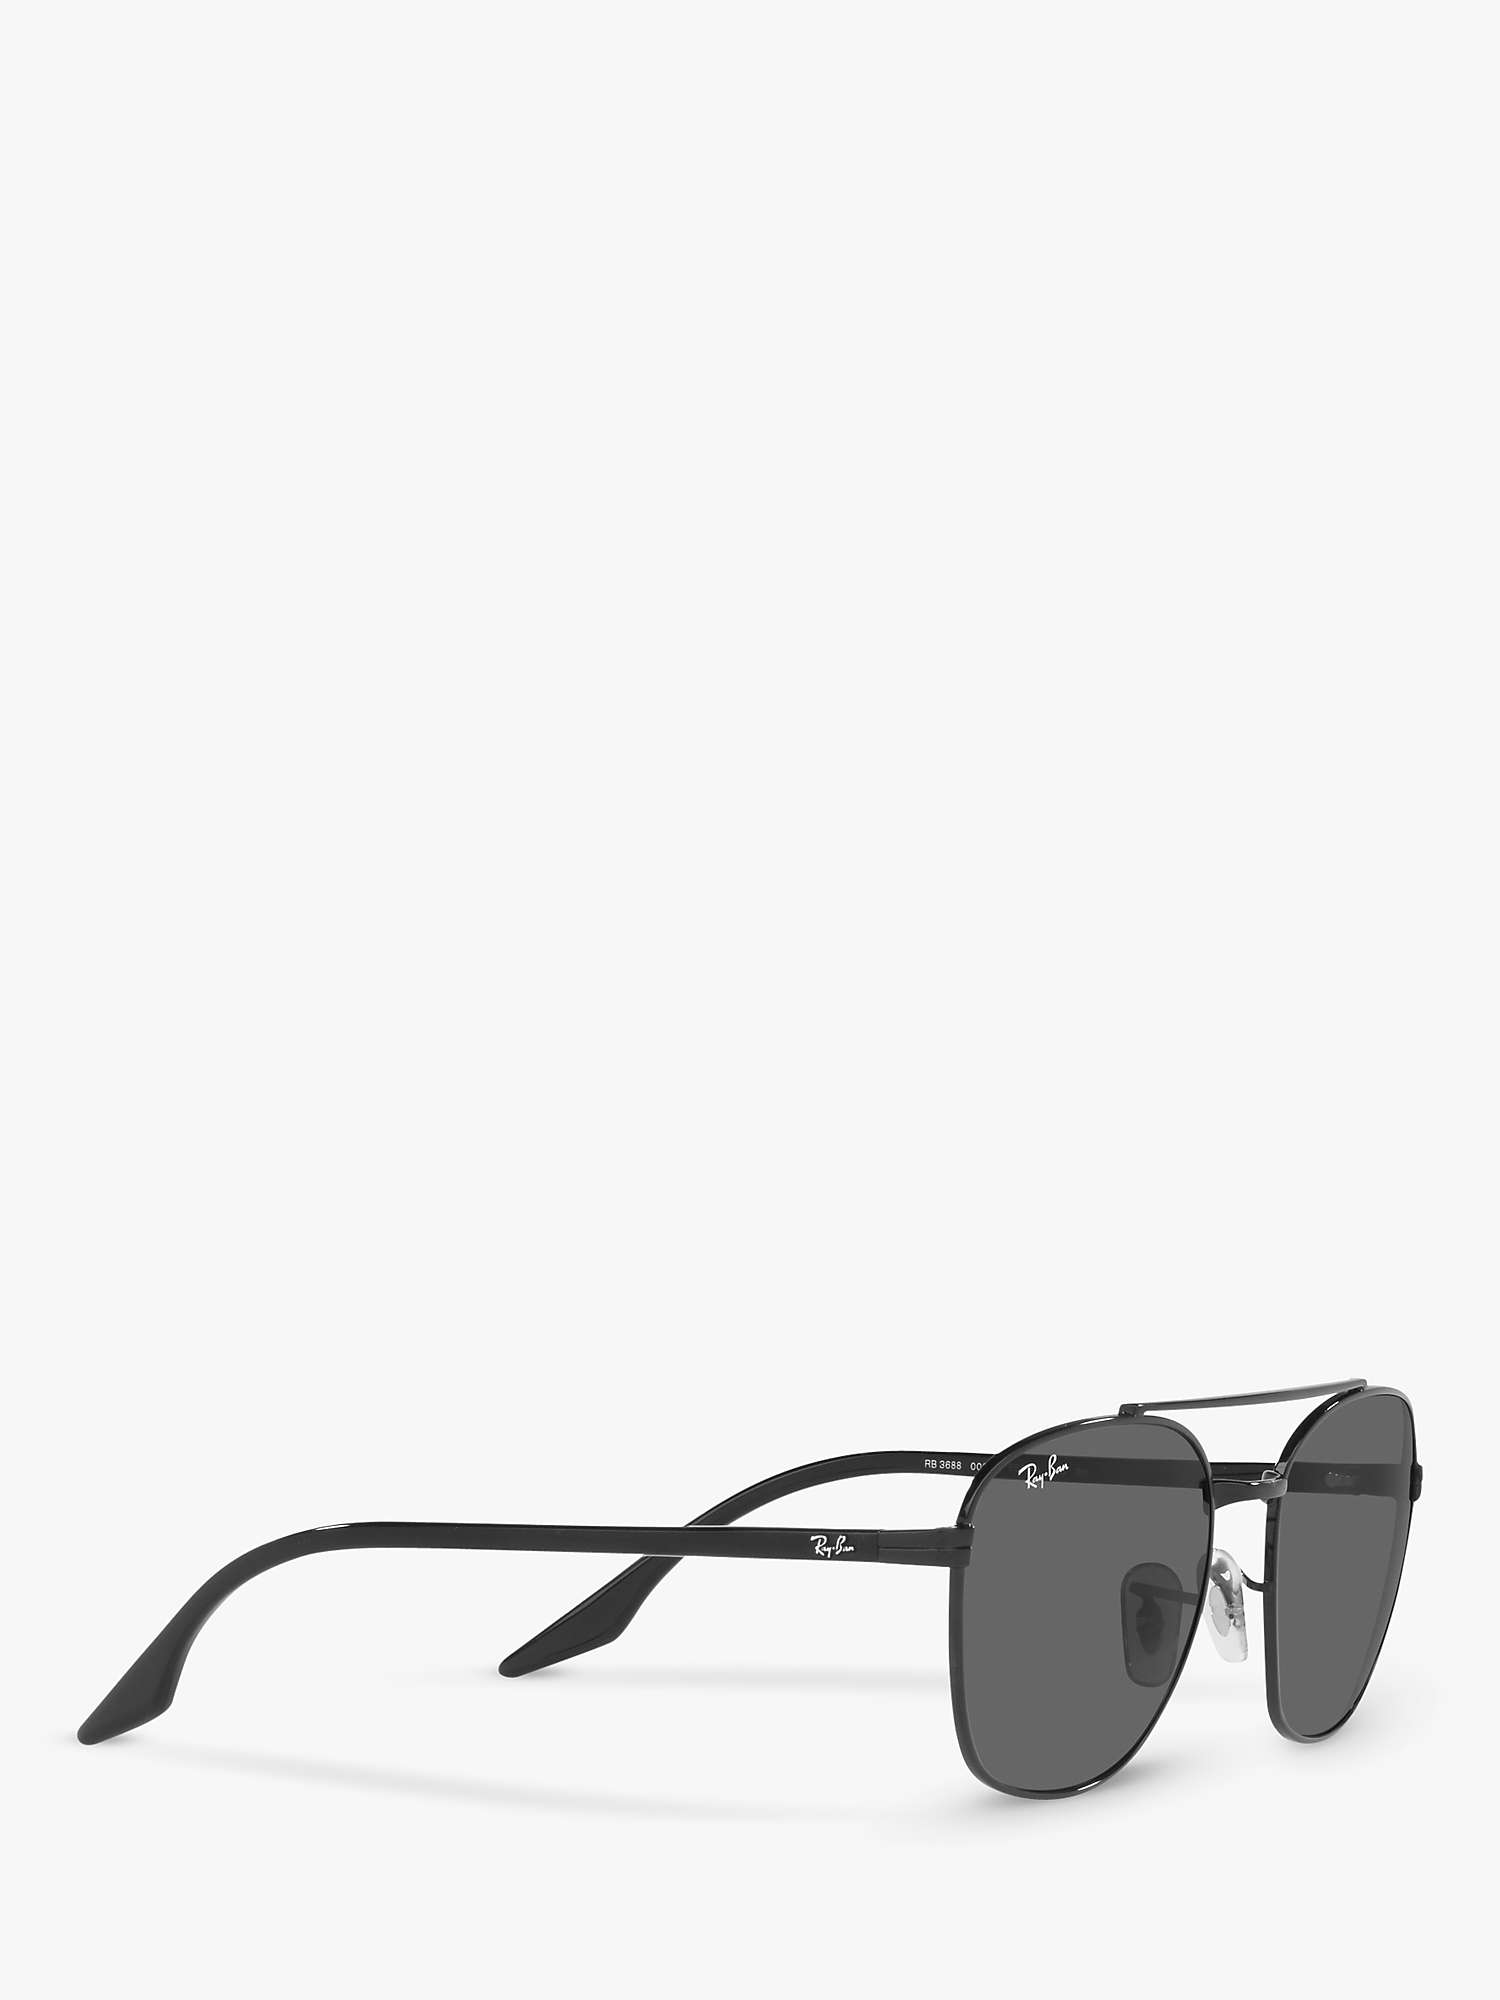 Ray-Ban RB3688 Unisex Square Sunglasses, Black/Grey at John Lewis & Partners